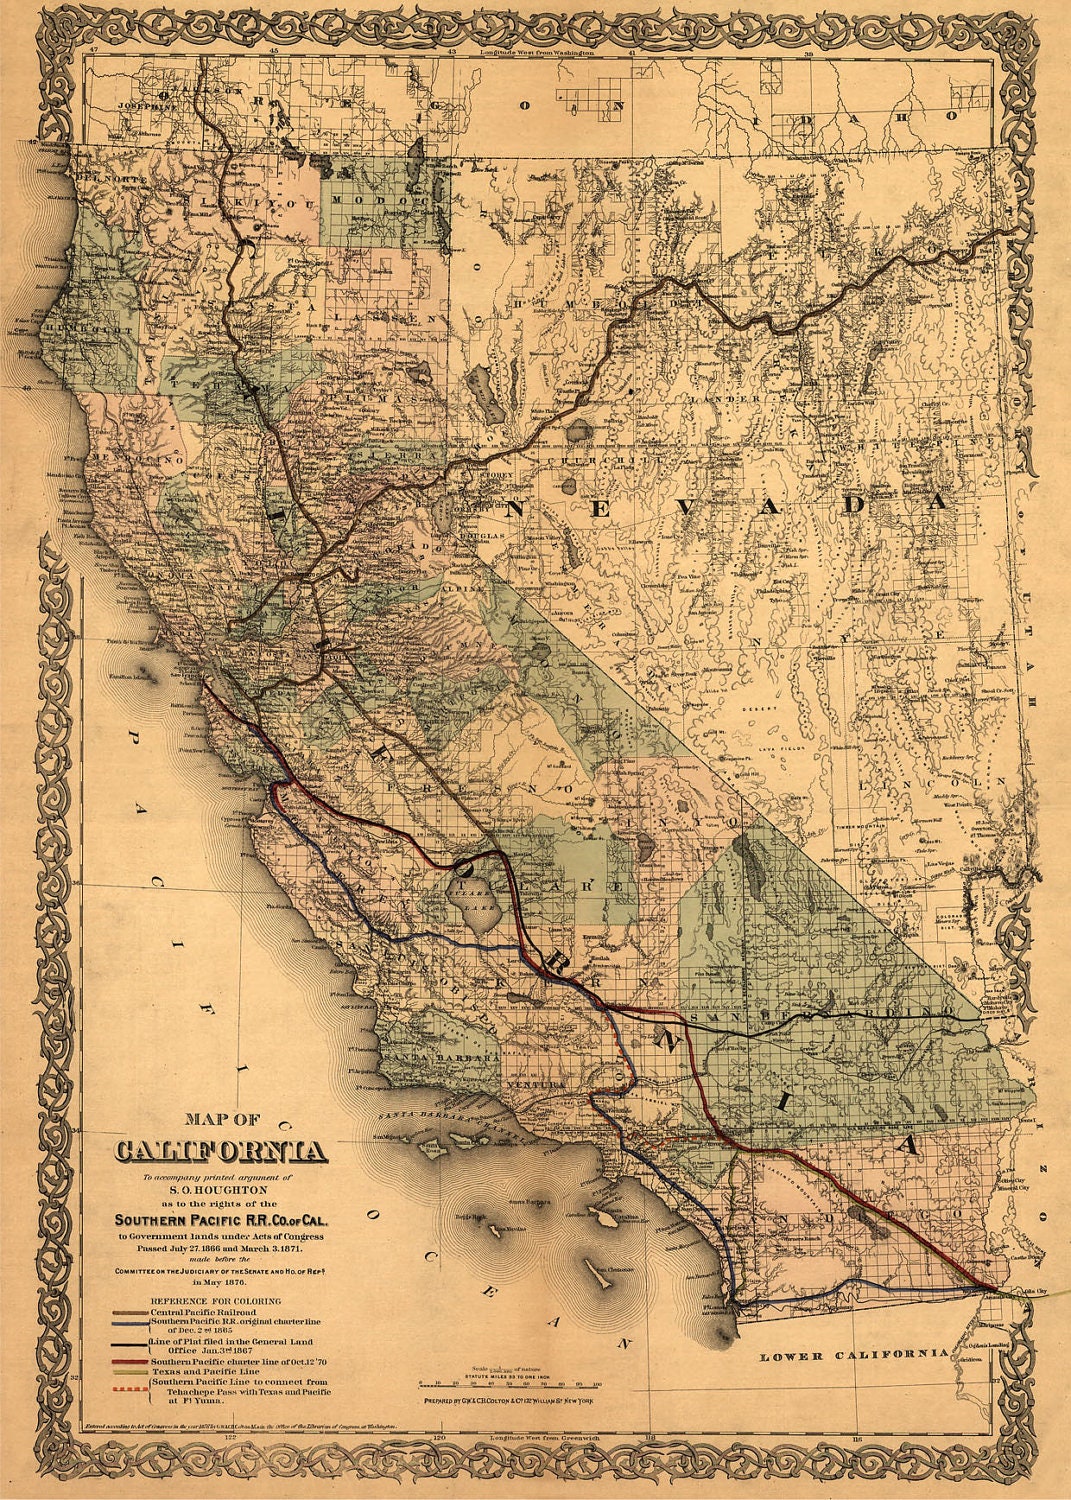 california railroad map